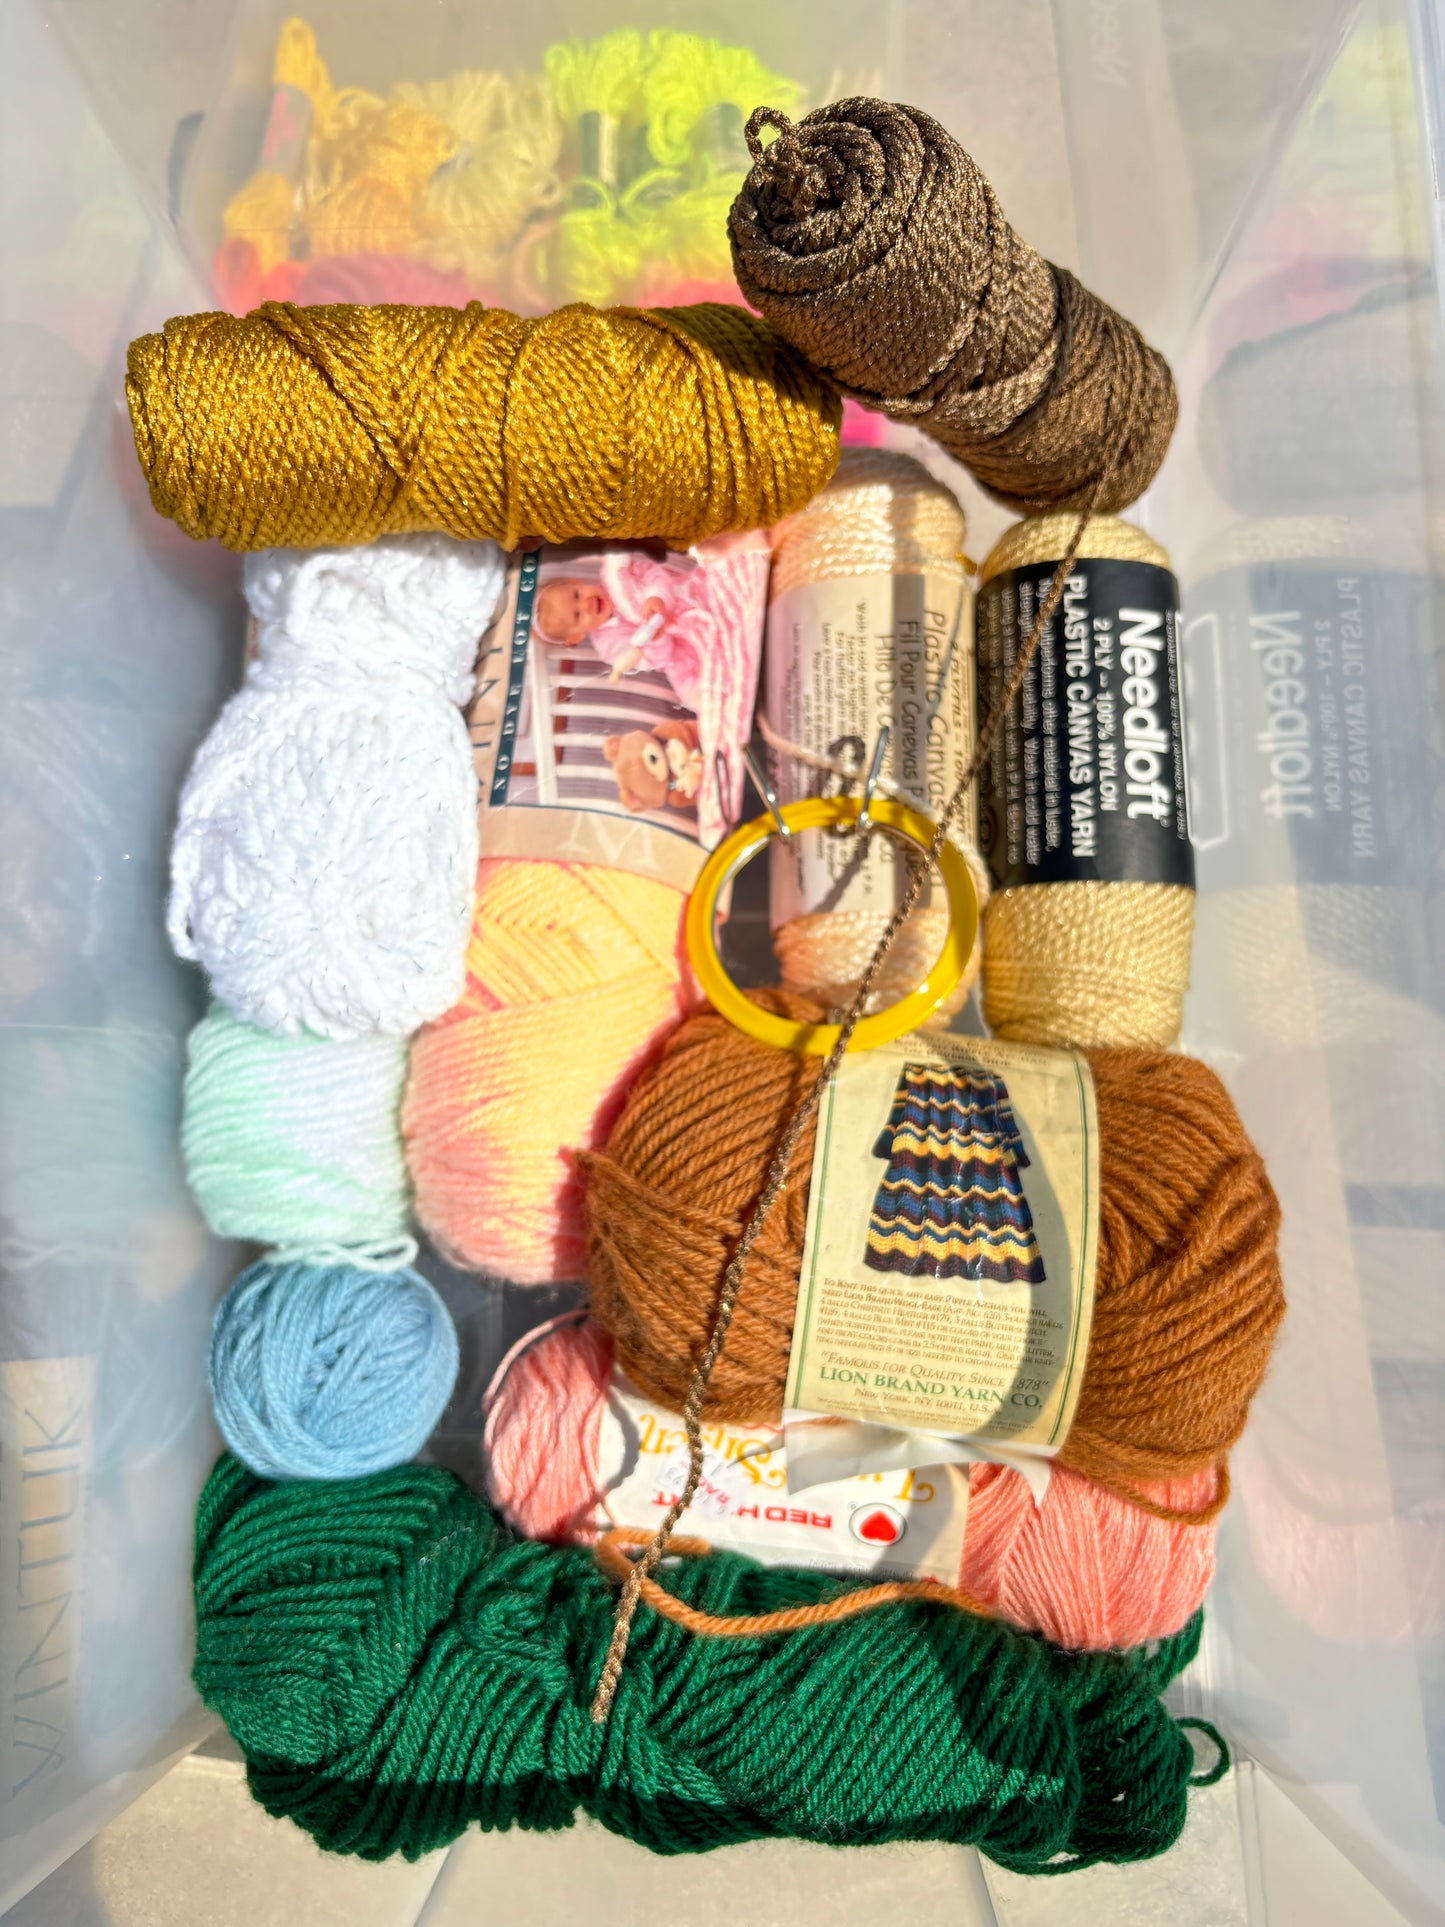 LOT of Yarn, Plastic Canvas Yarn, Needleloft Yarn, Knitting Yarn, 6 lbs Yarn